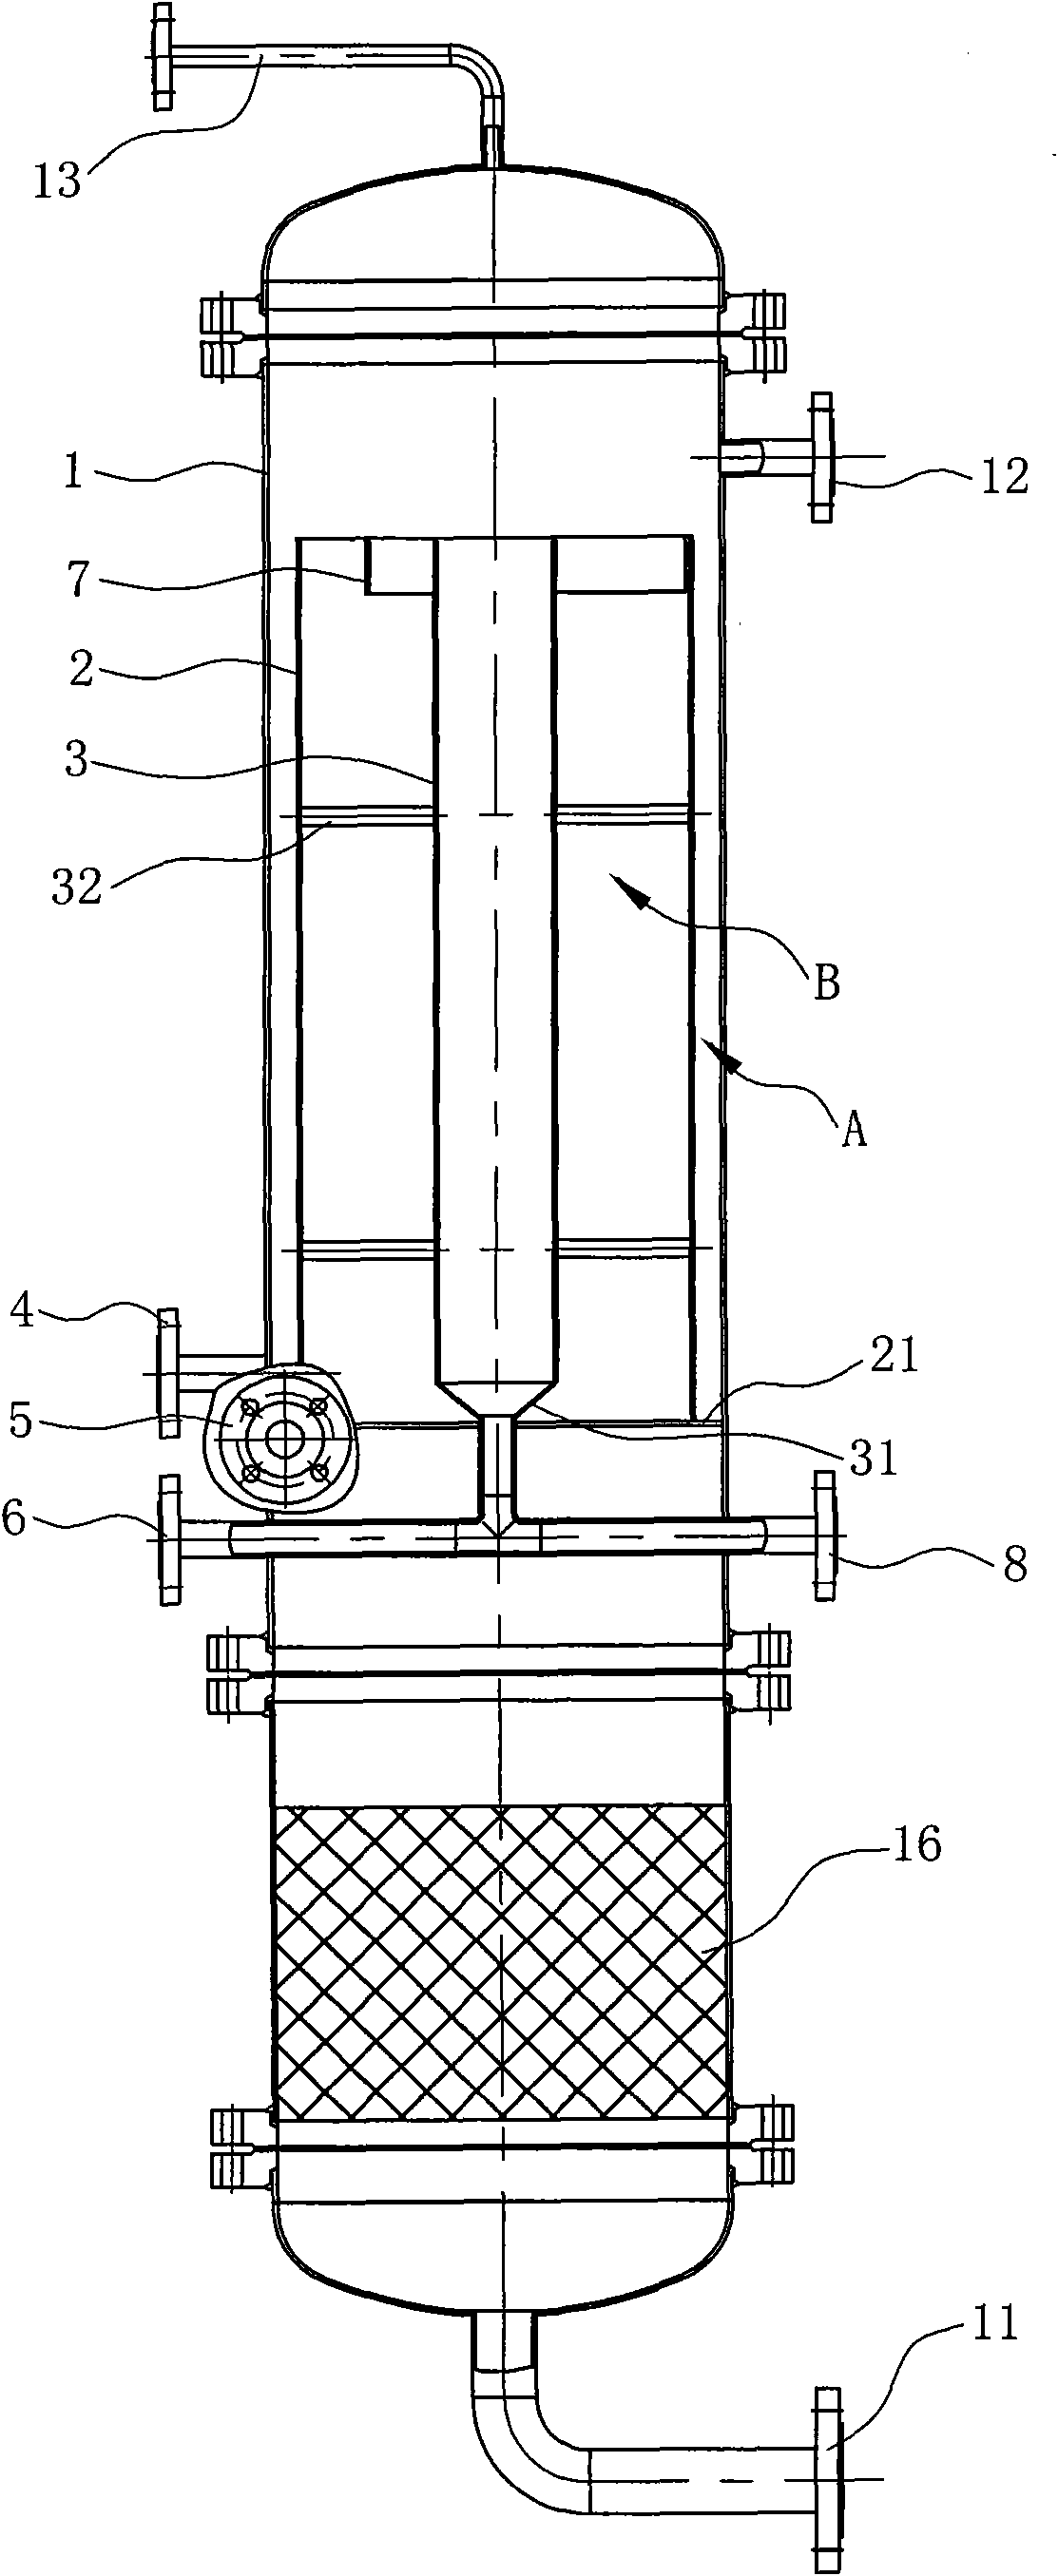 Pressure type air flotation separation device